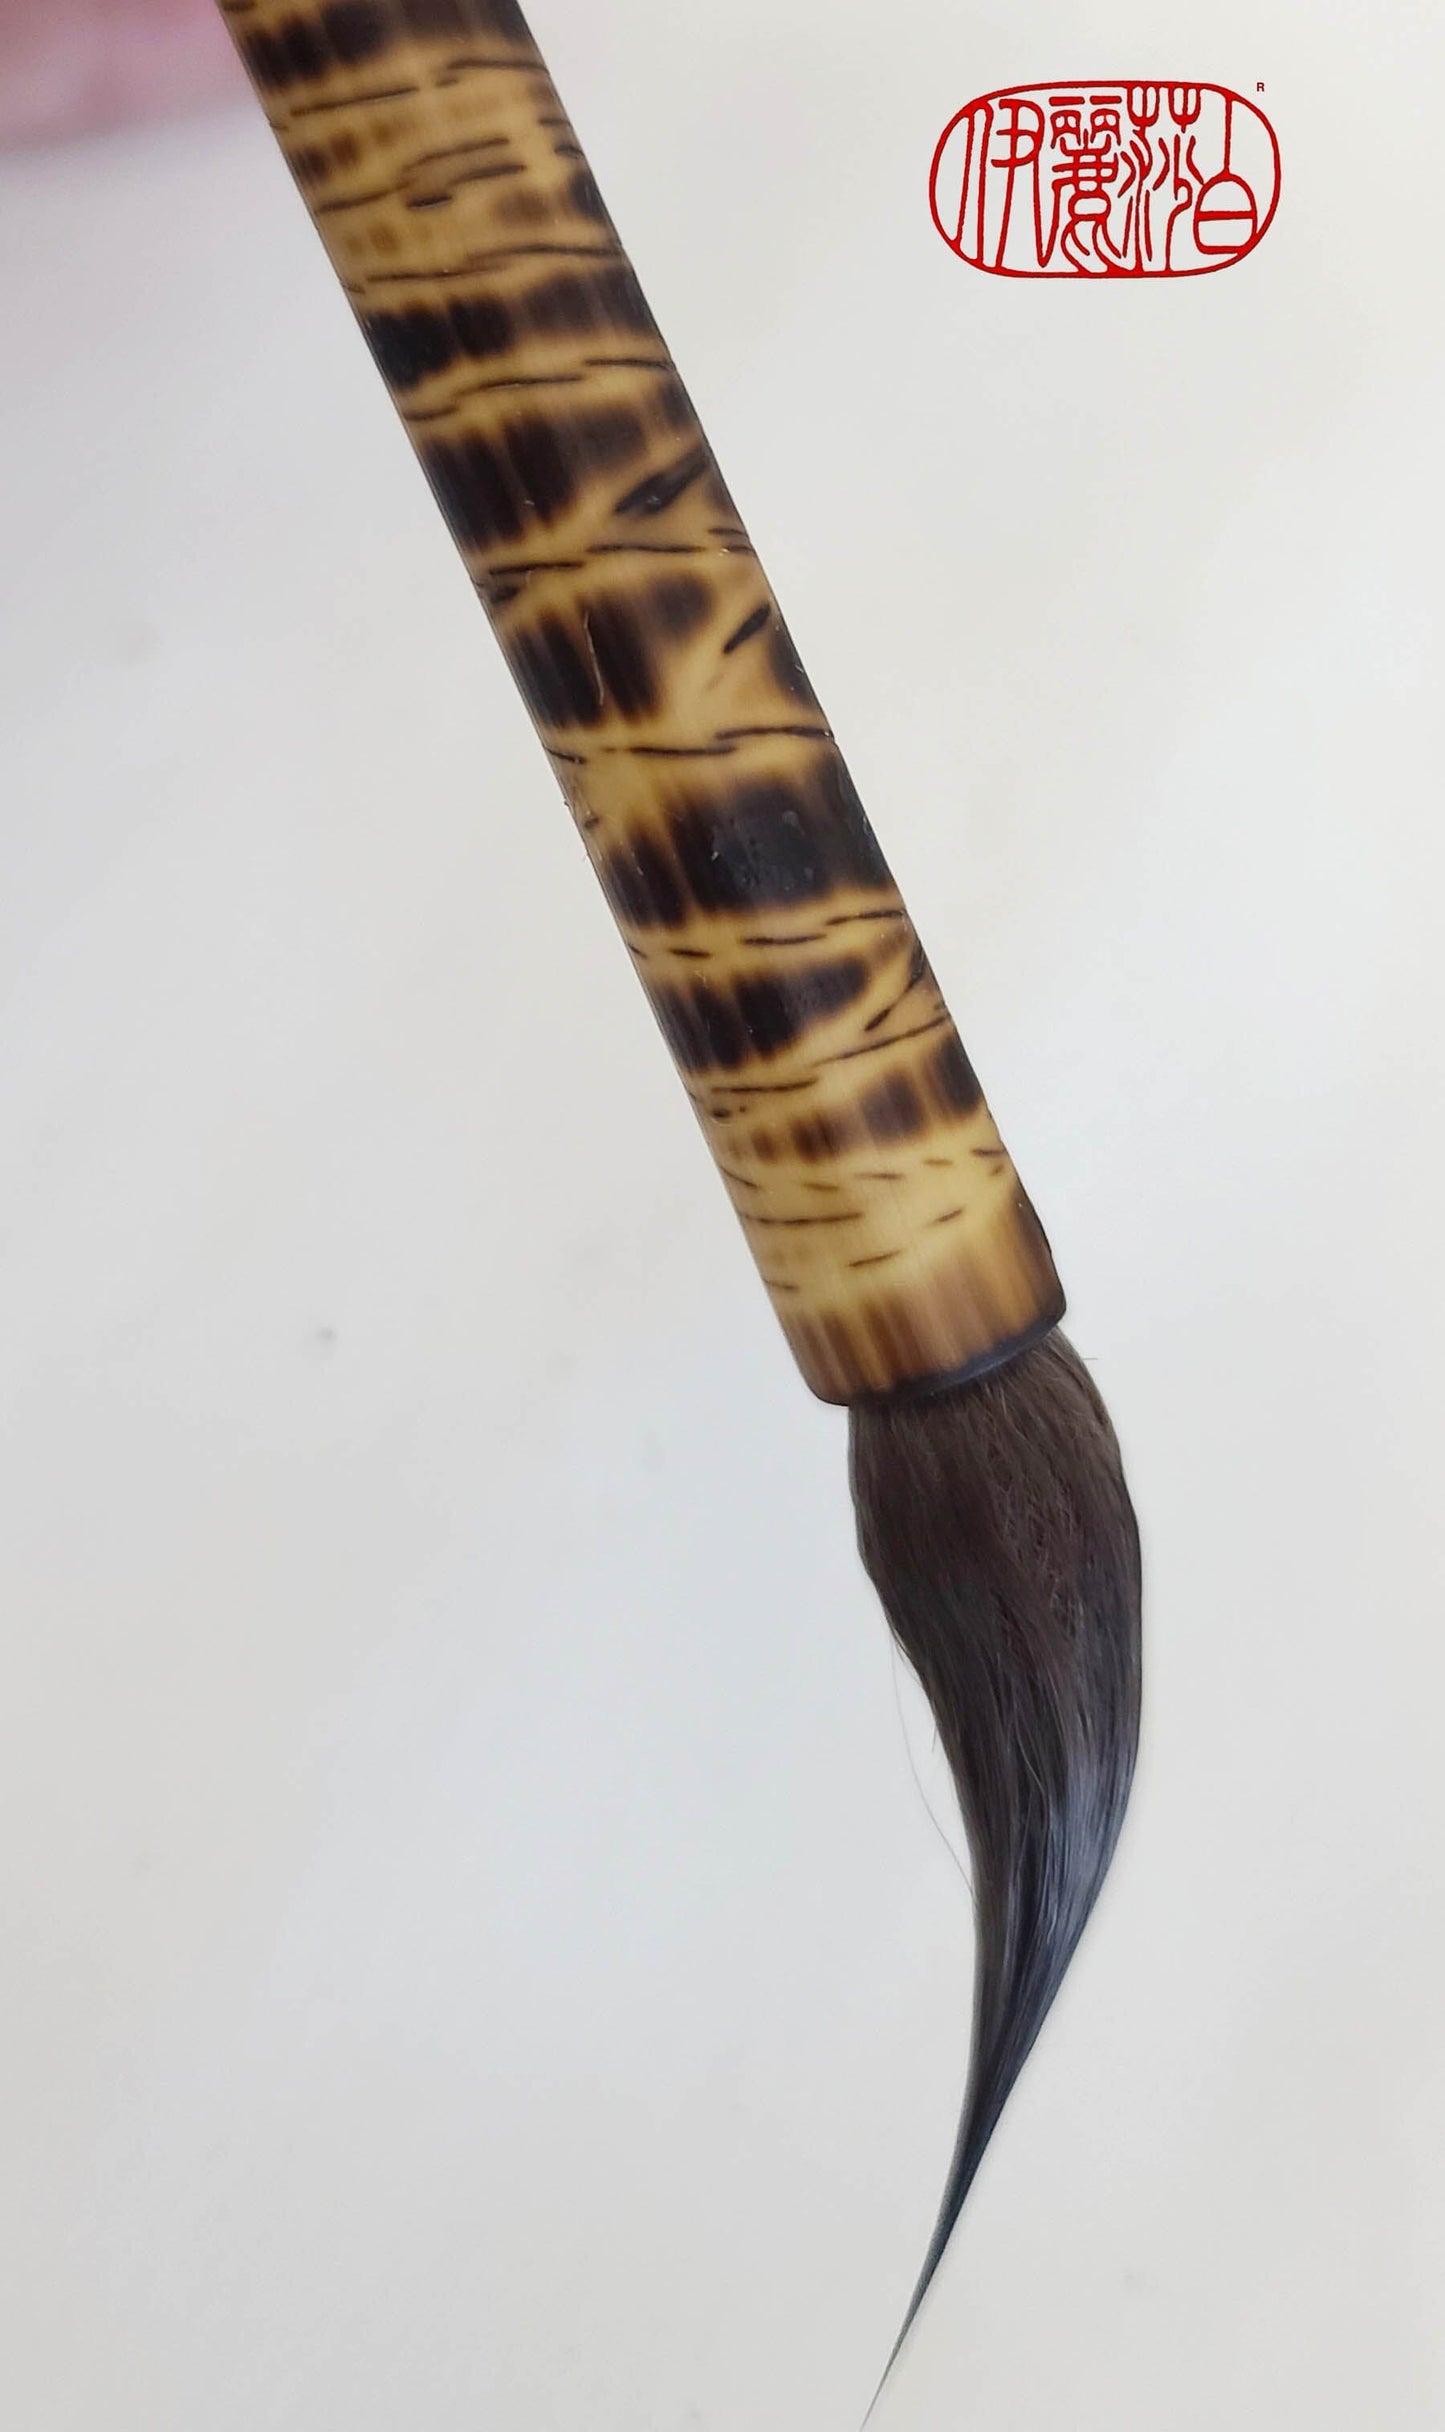 Natural Sable Paintbrushes With Bamboo Handles Sable Paintbrush Elizabeth Schowachert Art